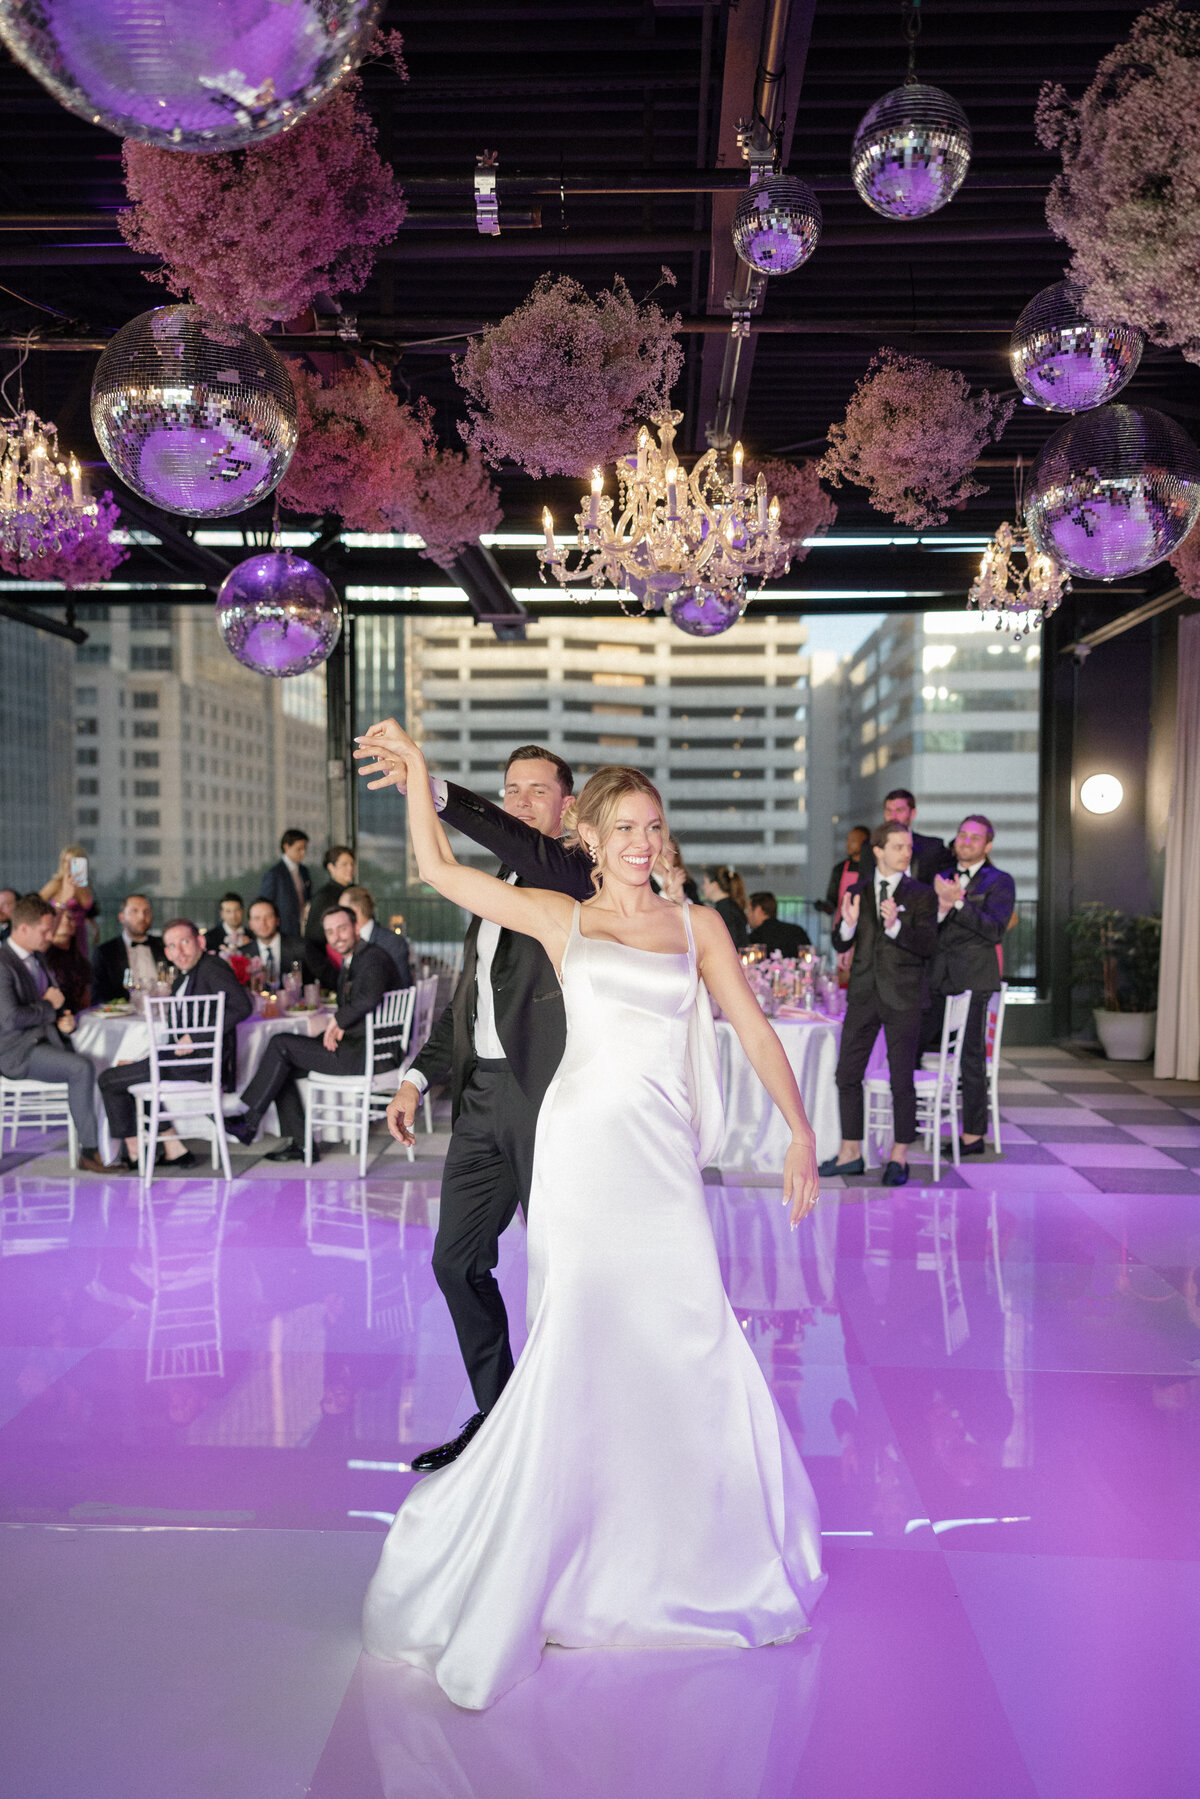 Groom spinning bride on dance floor at wedding